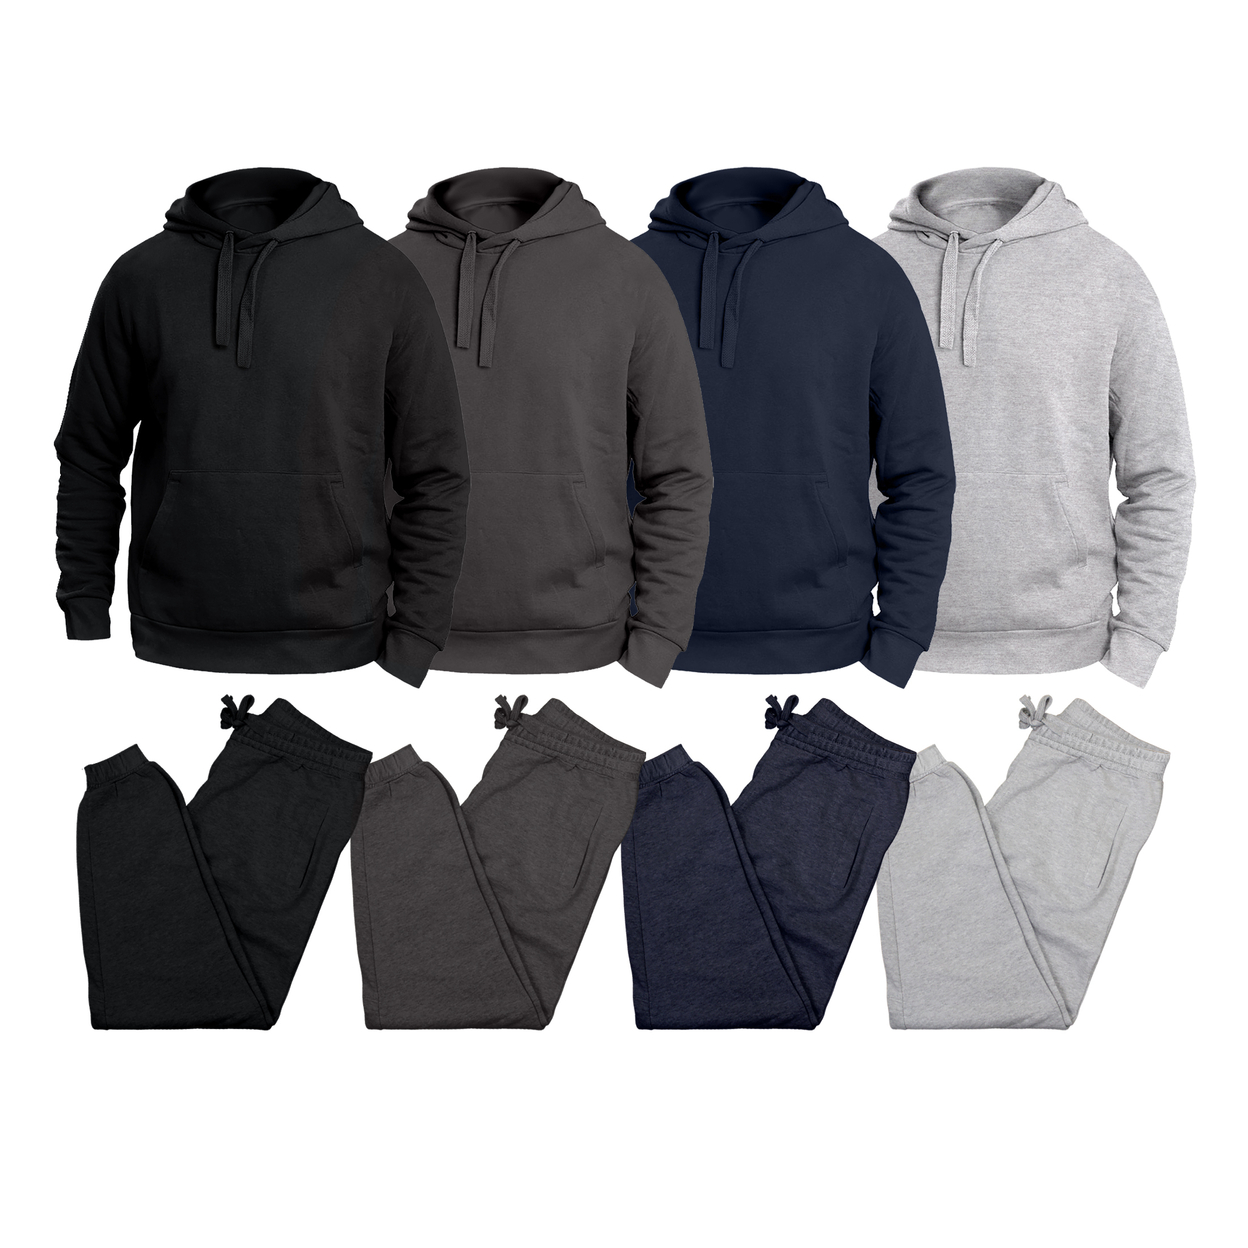 Multi-Pack: Big & Tall Men's Winter Warm Cozy Athletic Fleece Lined Multi-Pocket Cargo Sweatsuit - Charcoal, 1-pack, 3xl